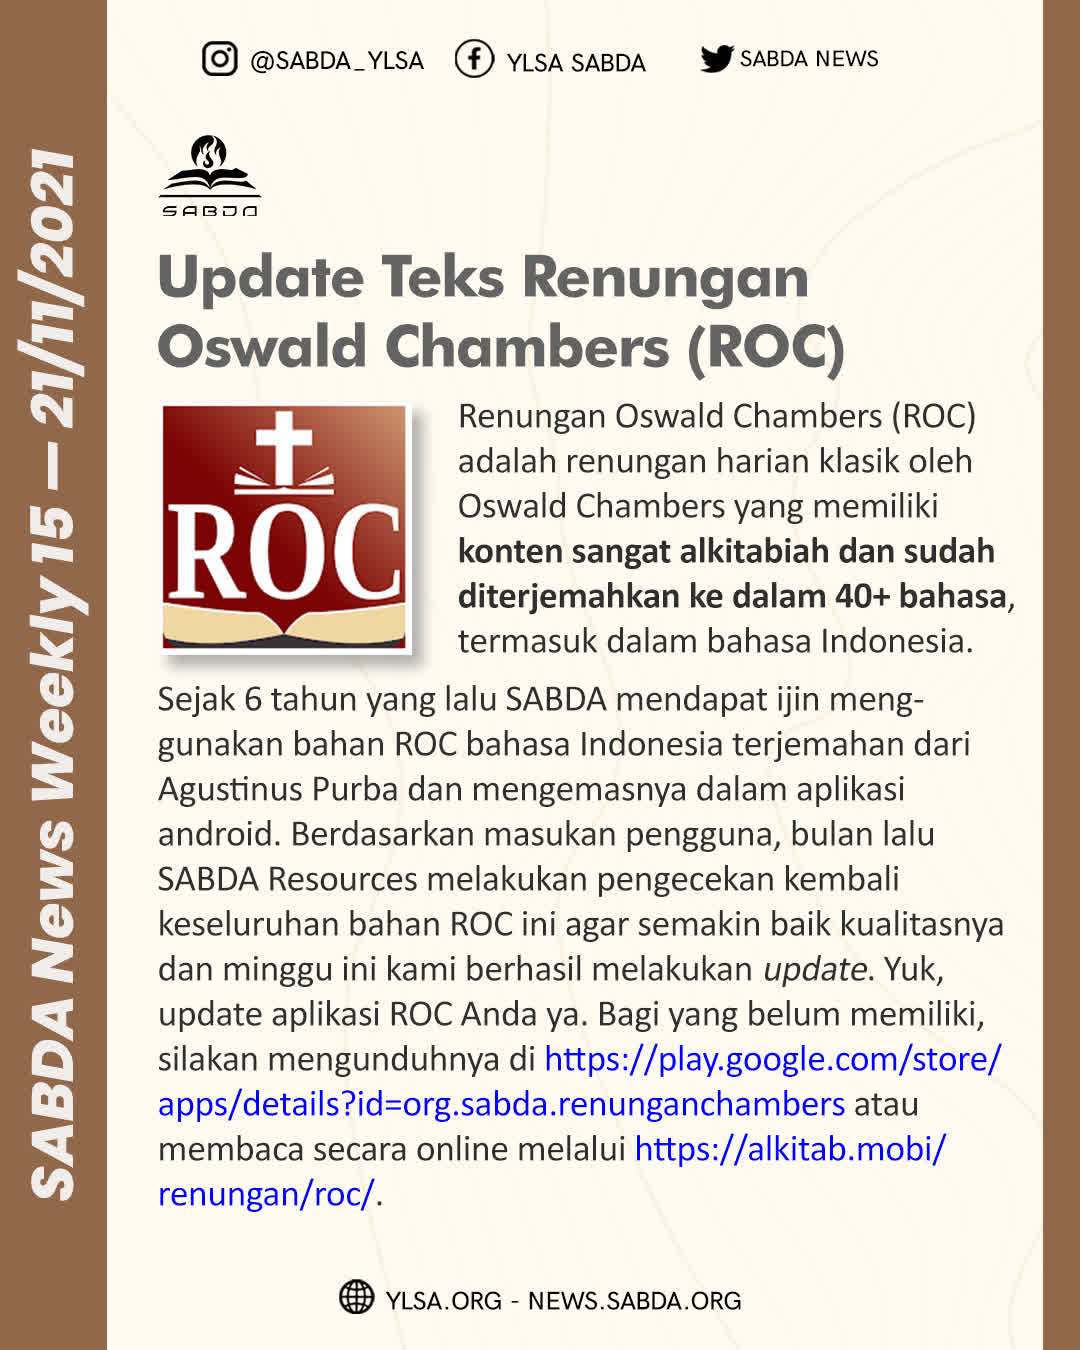 Update Teks Renungan Oswald Chambers (ROC)